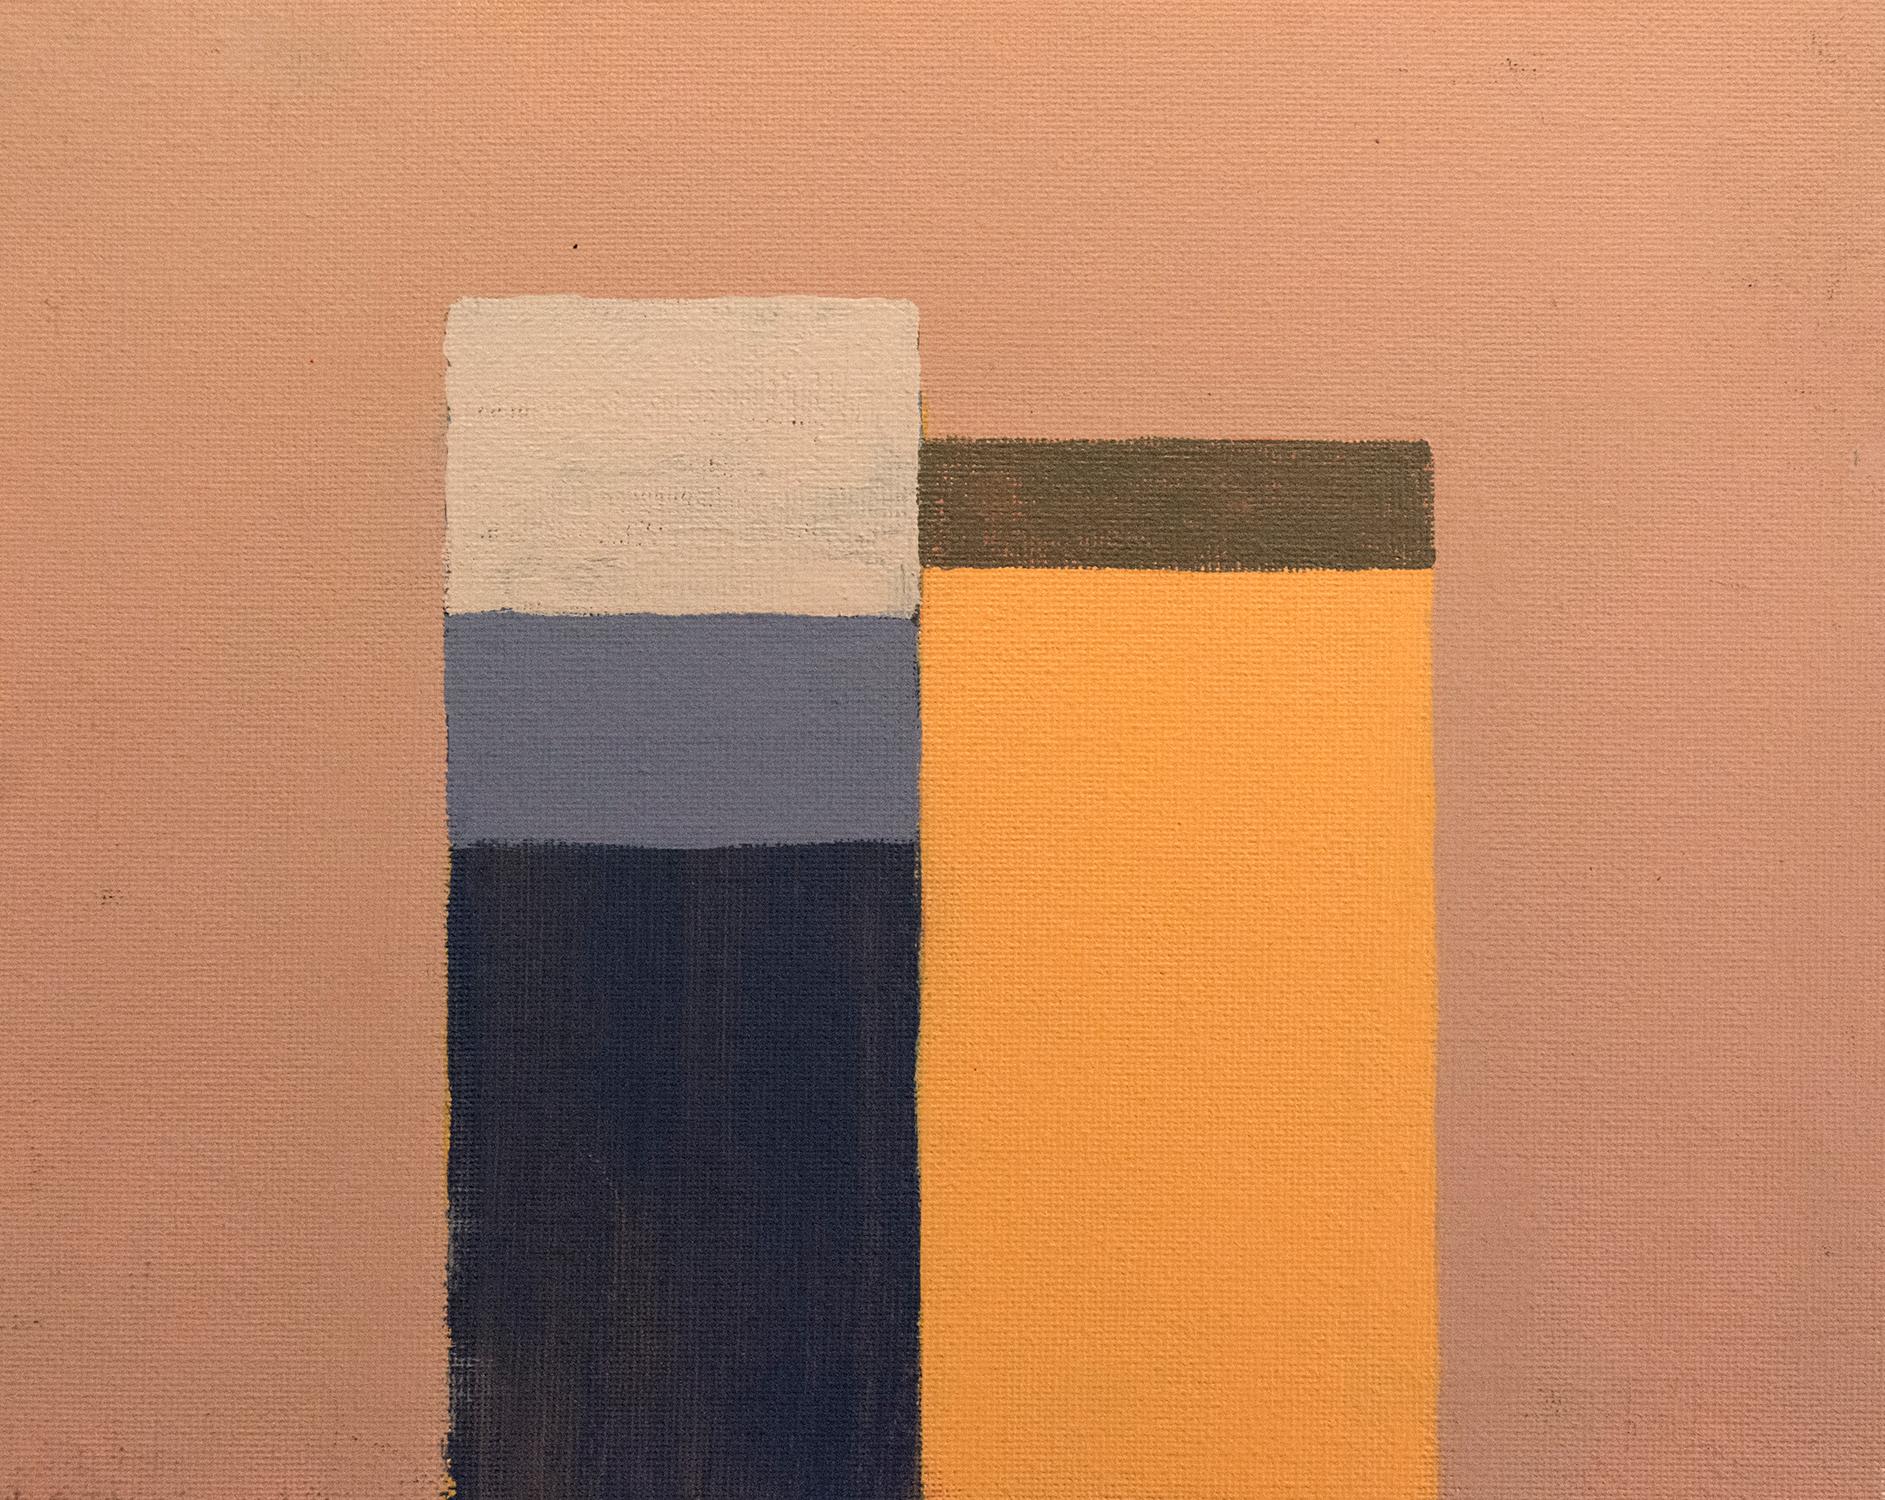 Things Plus Tops - small, dark blue, orange, minimalist still life on plexiglass - Painting by David Cantine